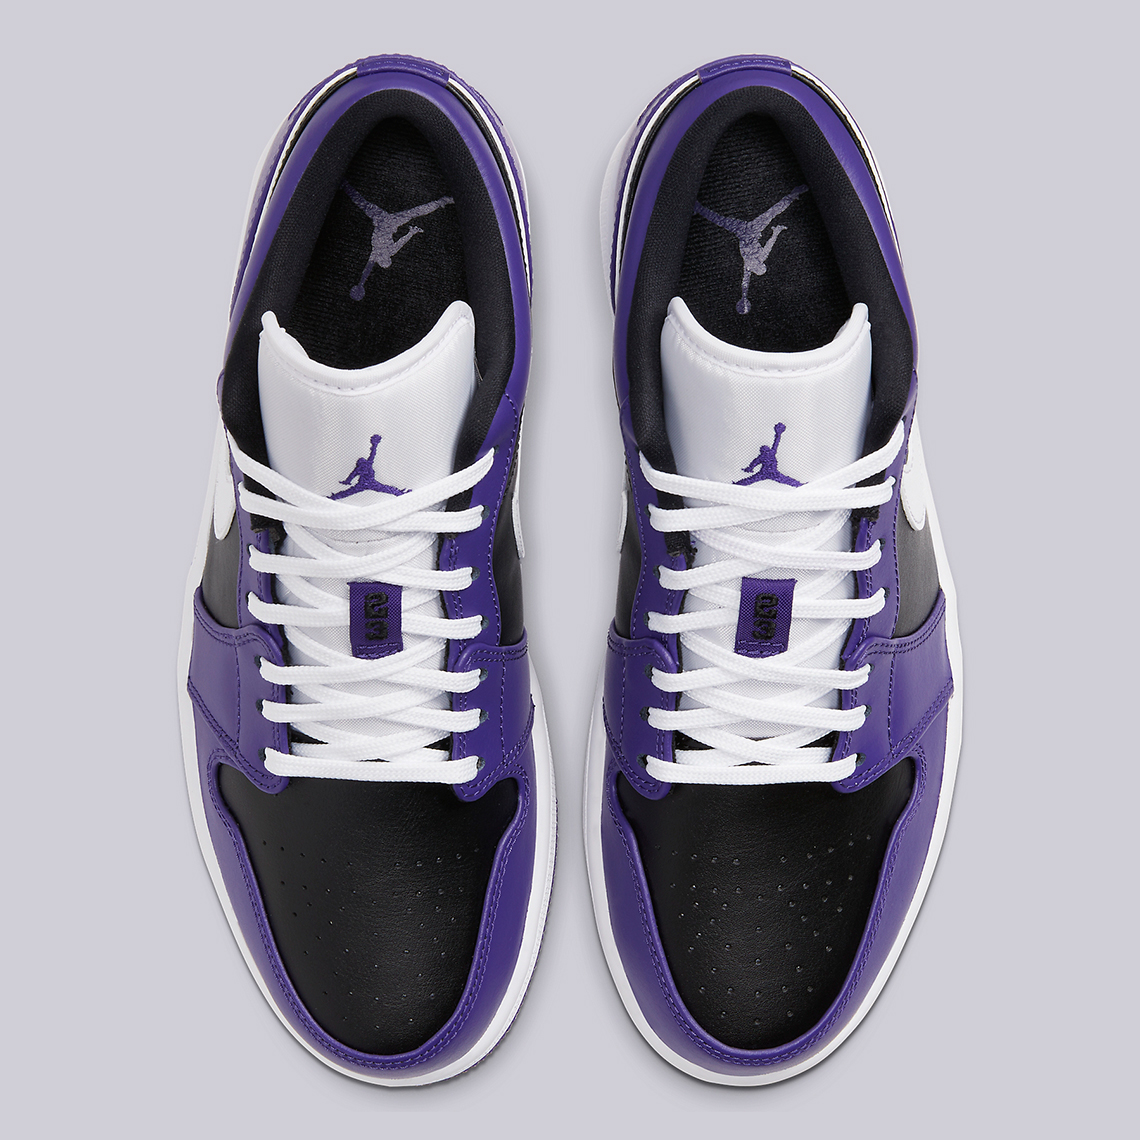 Air Jordan 1 Low Purple Black Release Info SneakerNews com